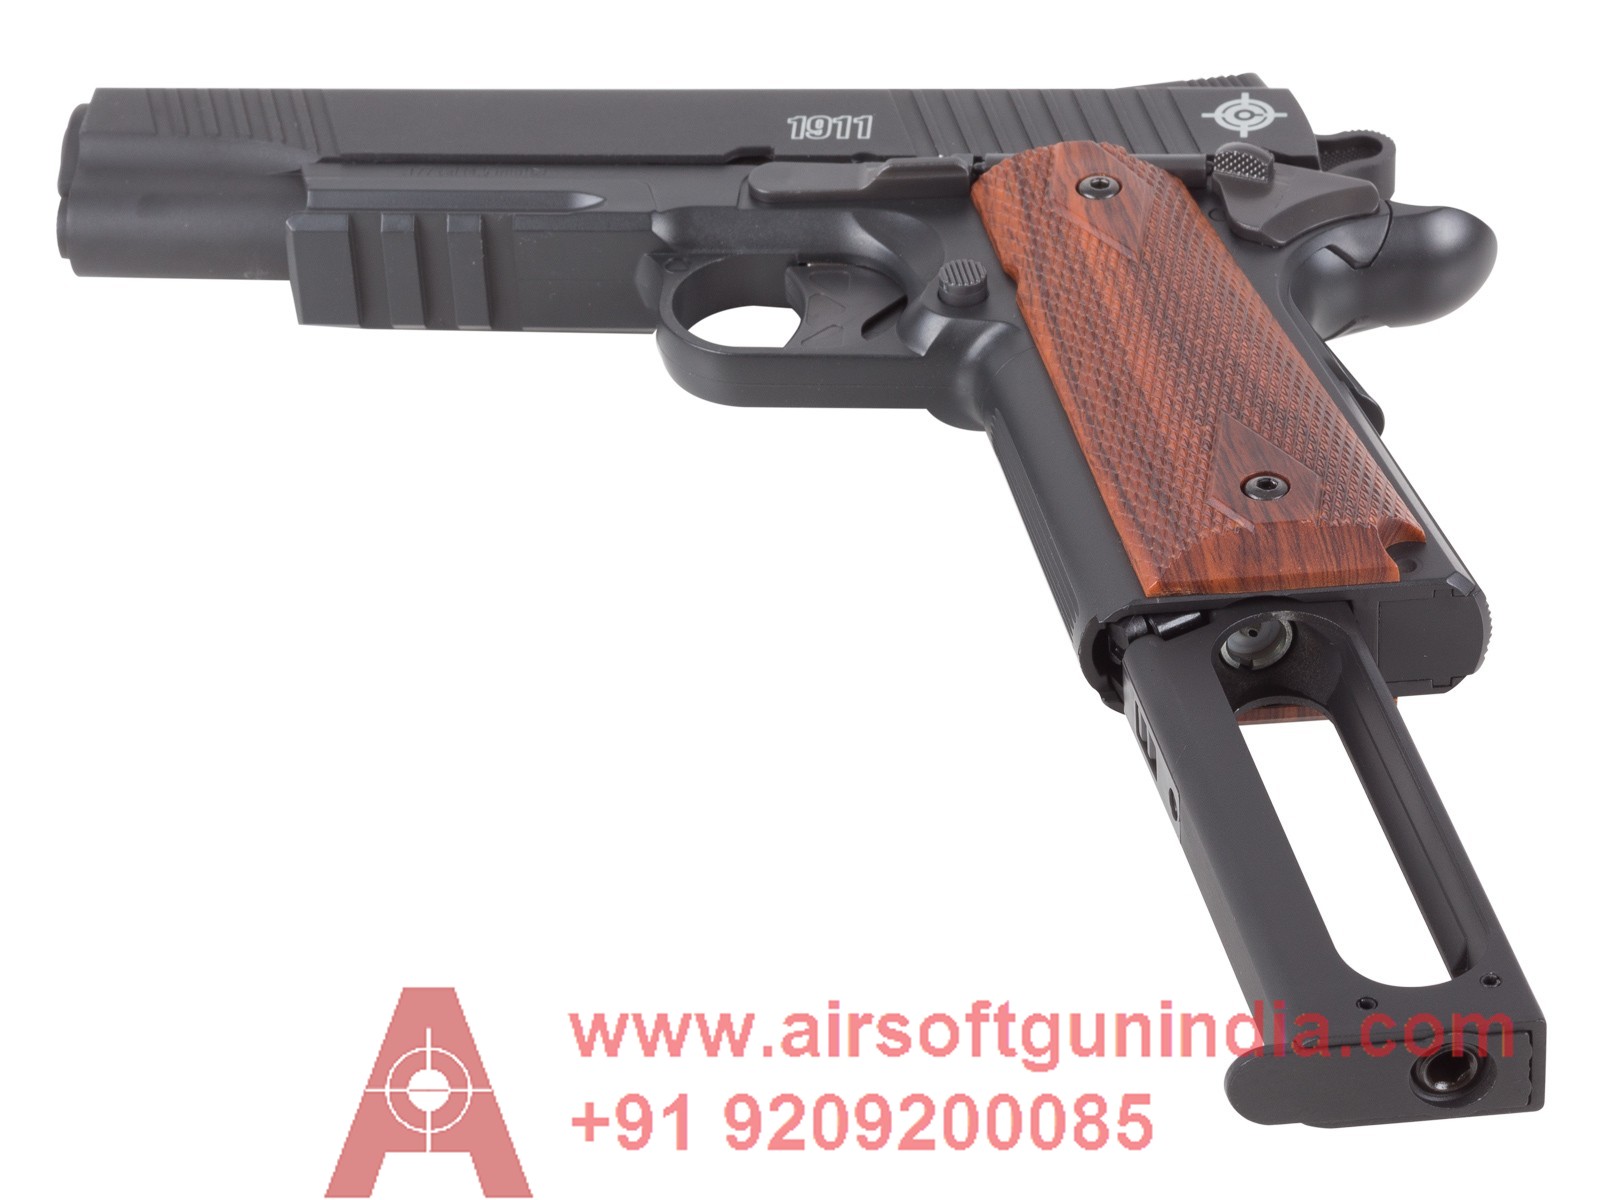 Crosman 1911 CO2 Pellet Pistol, Matte Black By Airsoft Gun India